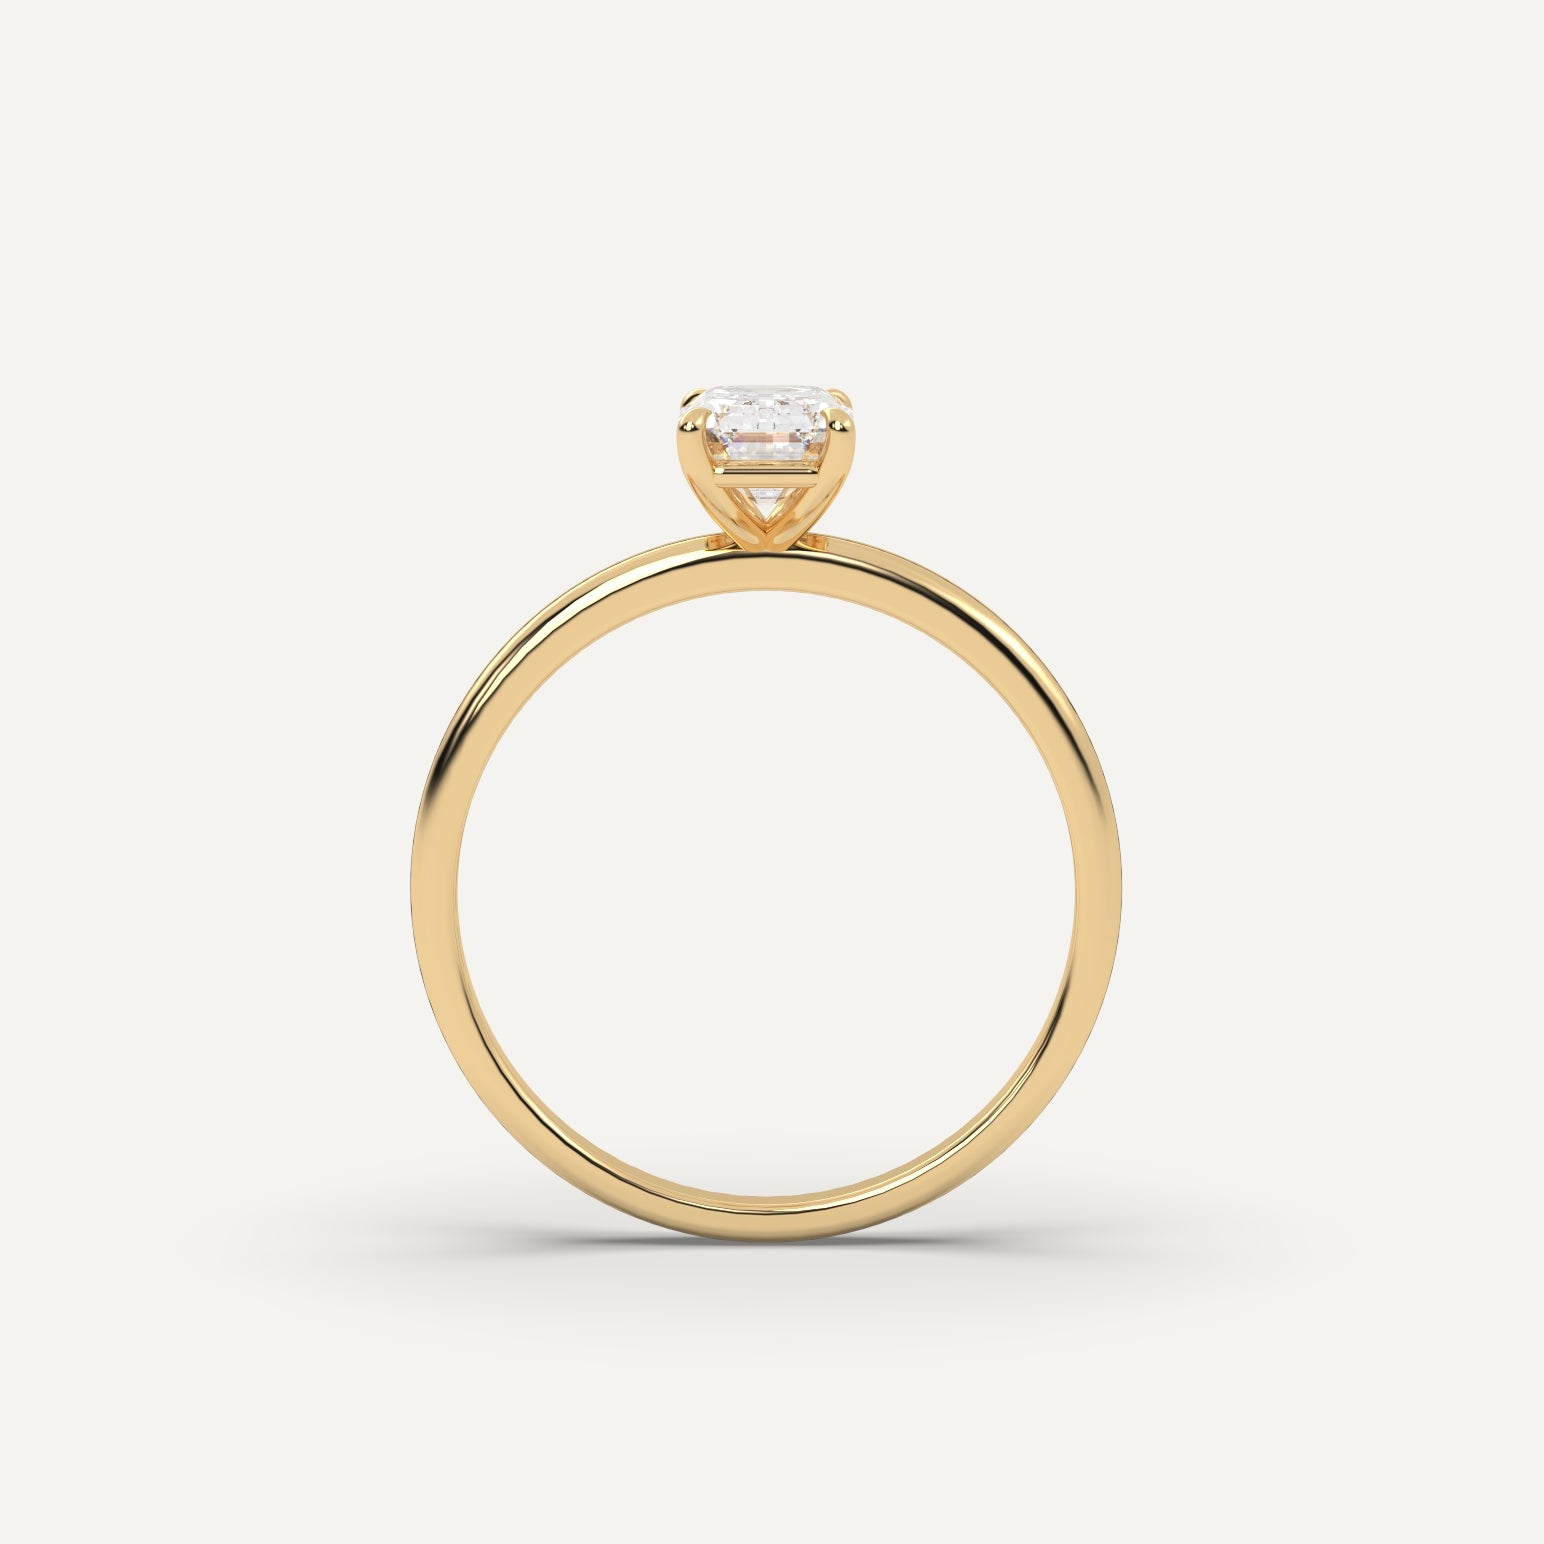 Emerald Cut Diamond Engagement Ring - 1 carat